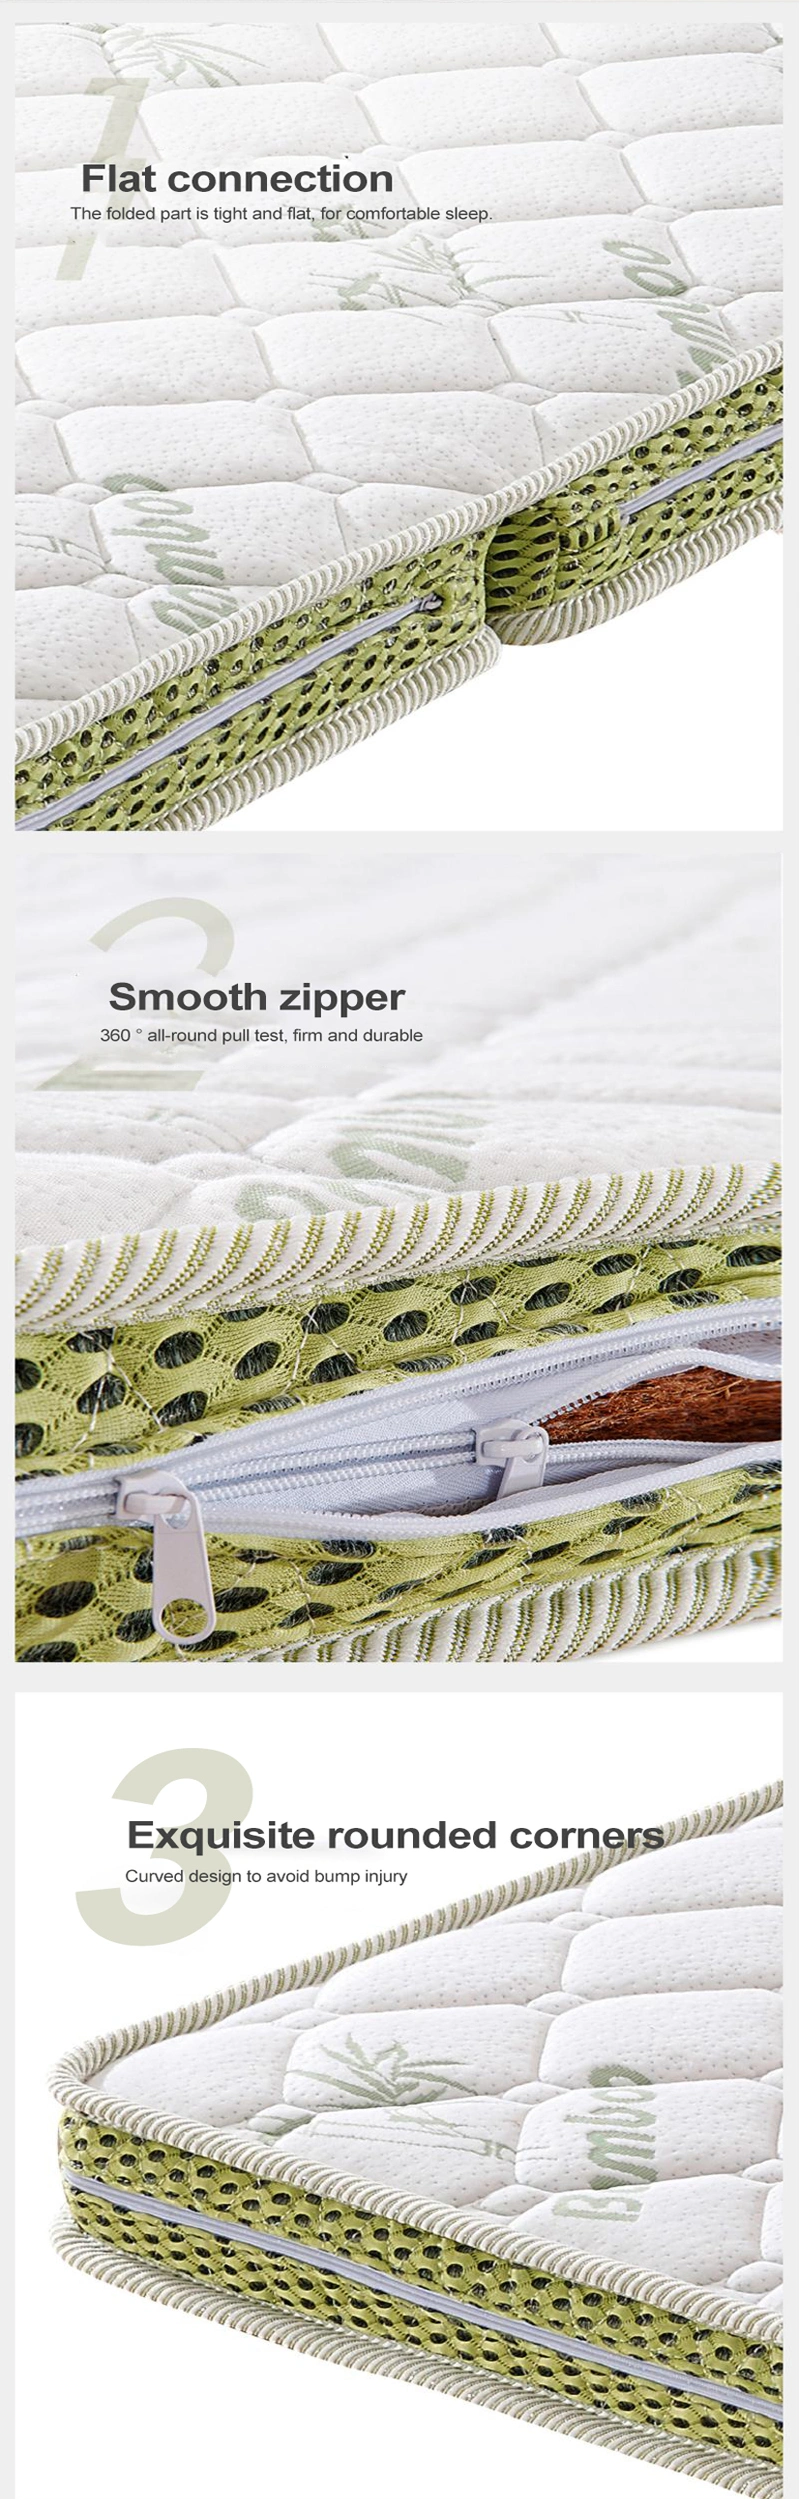 Home Foam Sleeping Tatami Folding Detachable Washable 6cm Double Bed